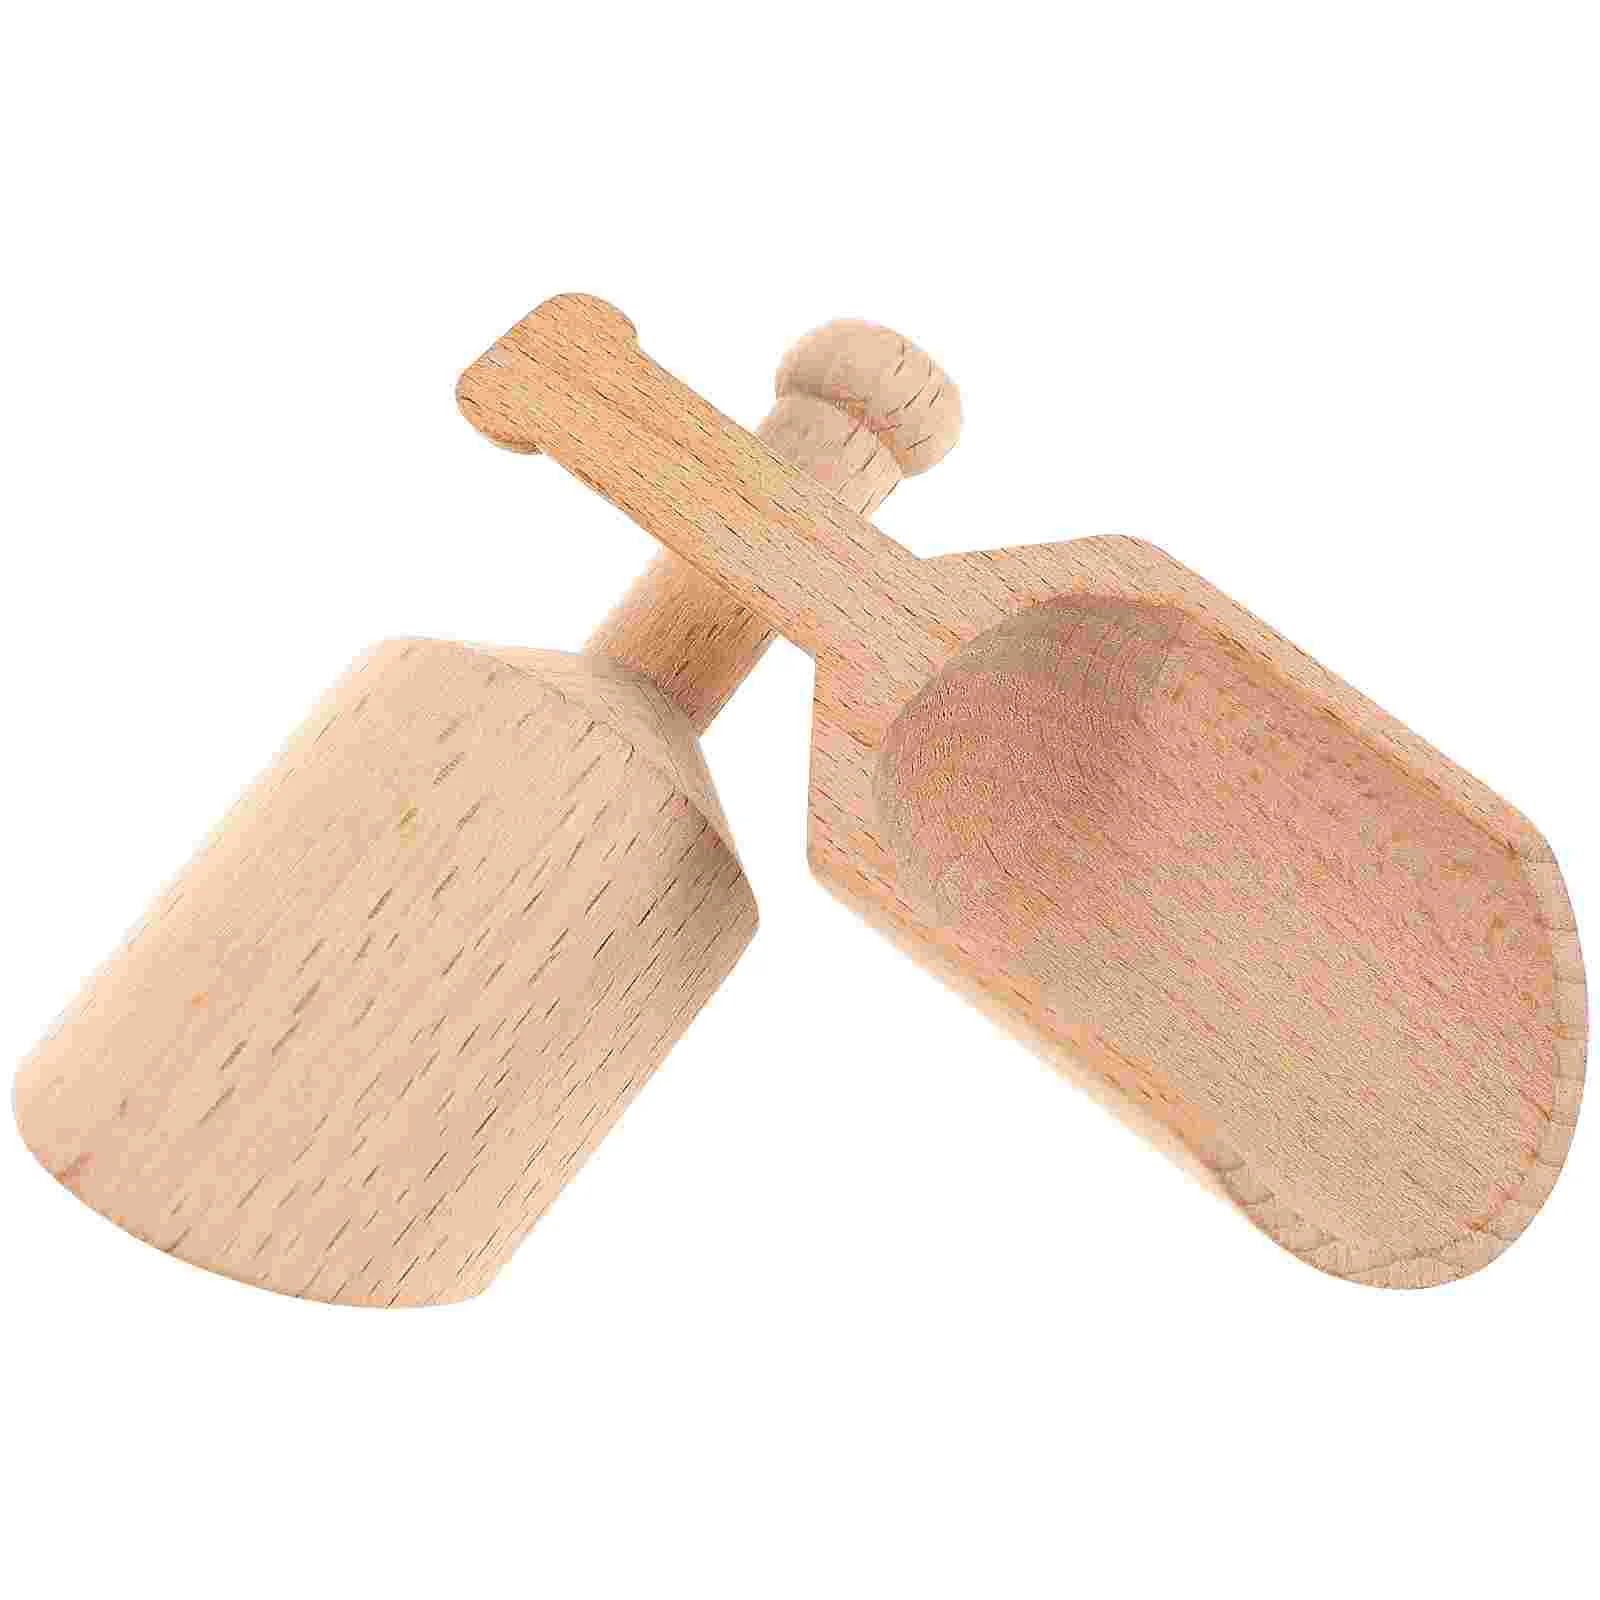 

2 Useful Practical Household Lightweight Bath Salt Spoons Spoon for Candy Bath Salts